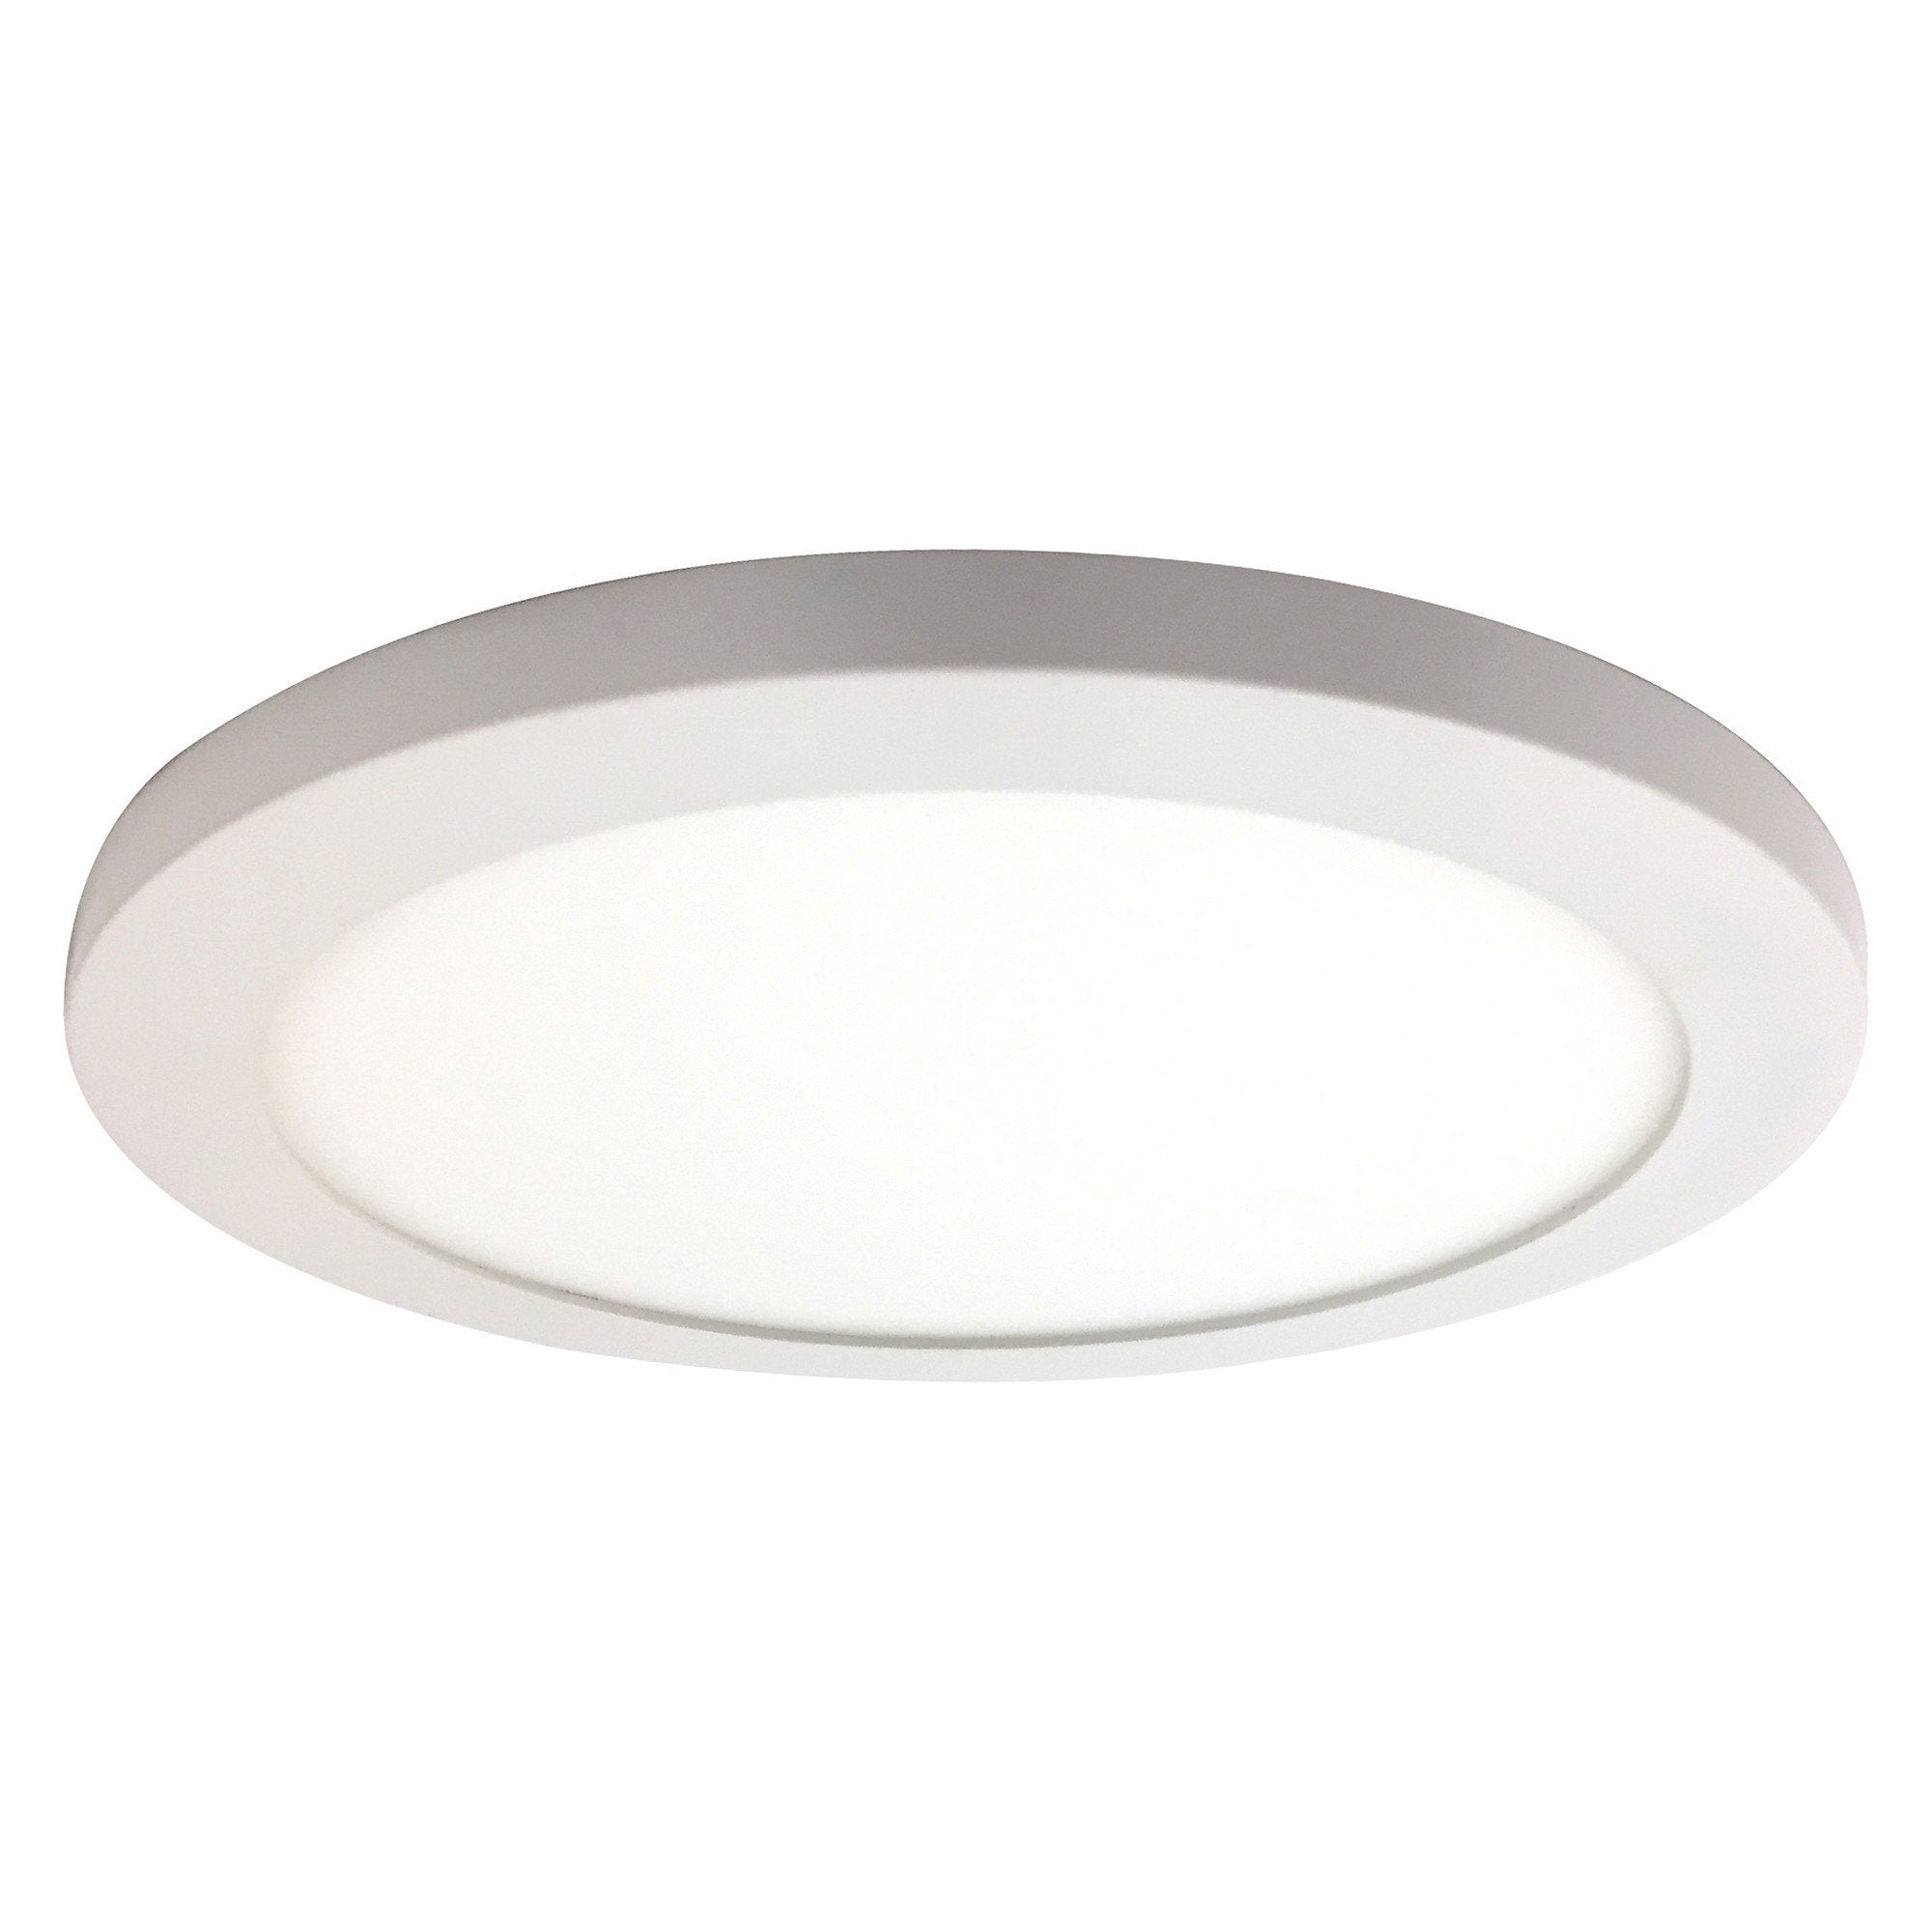 Disc (l) LED Round Flush Mount - Bronze Ceiling Access Lighting 